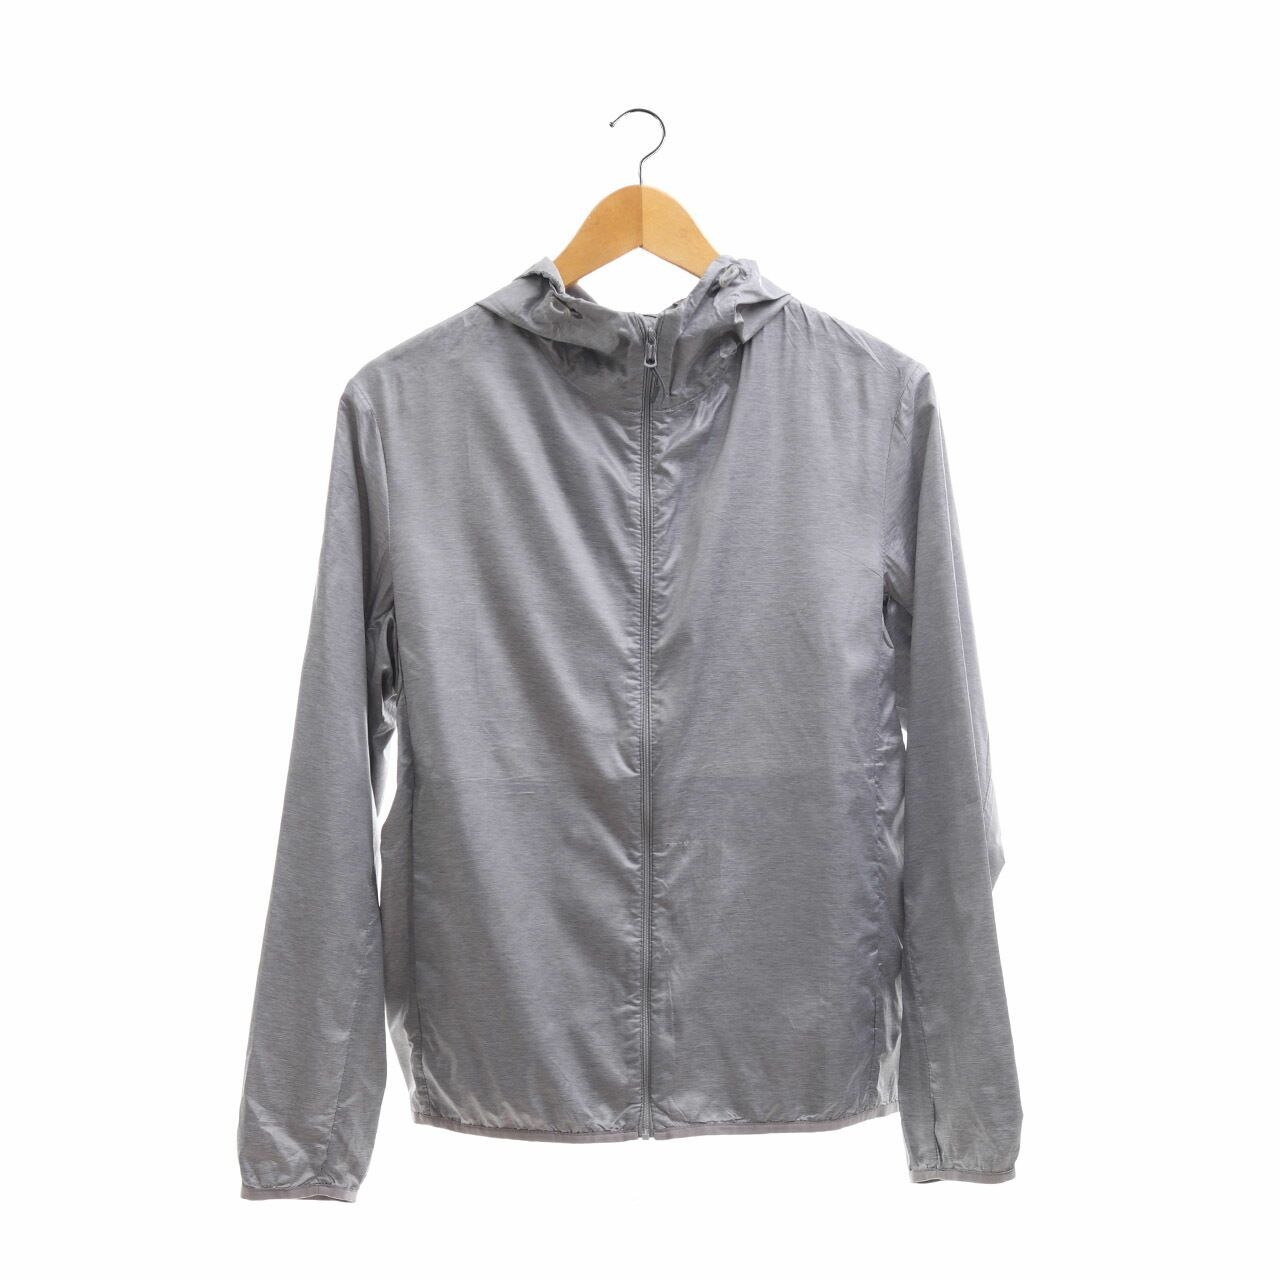 UNIQLO Grey Jacket